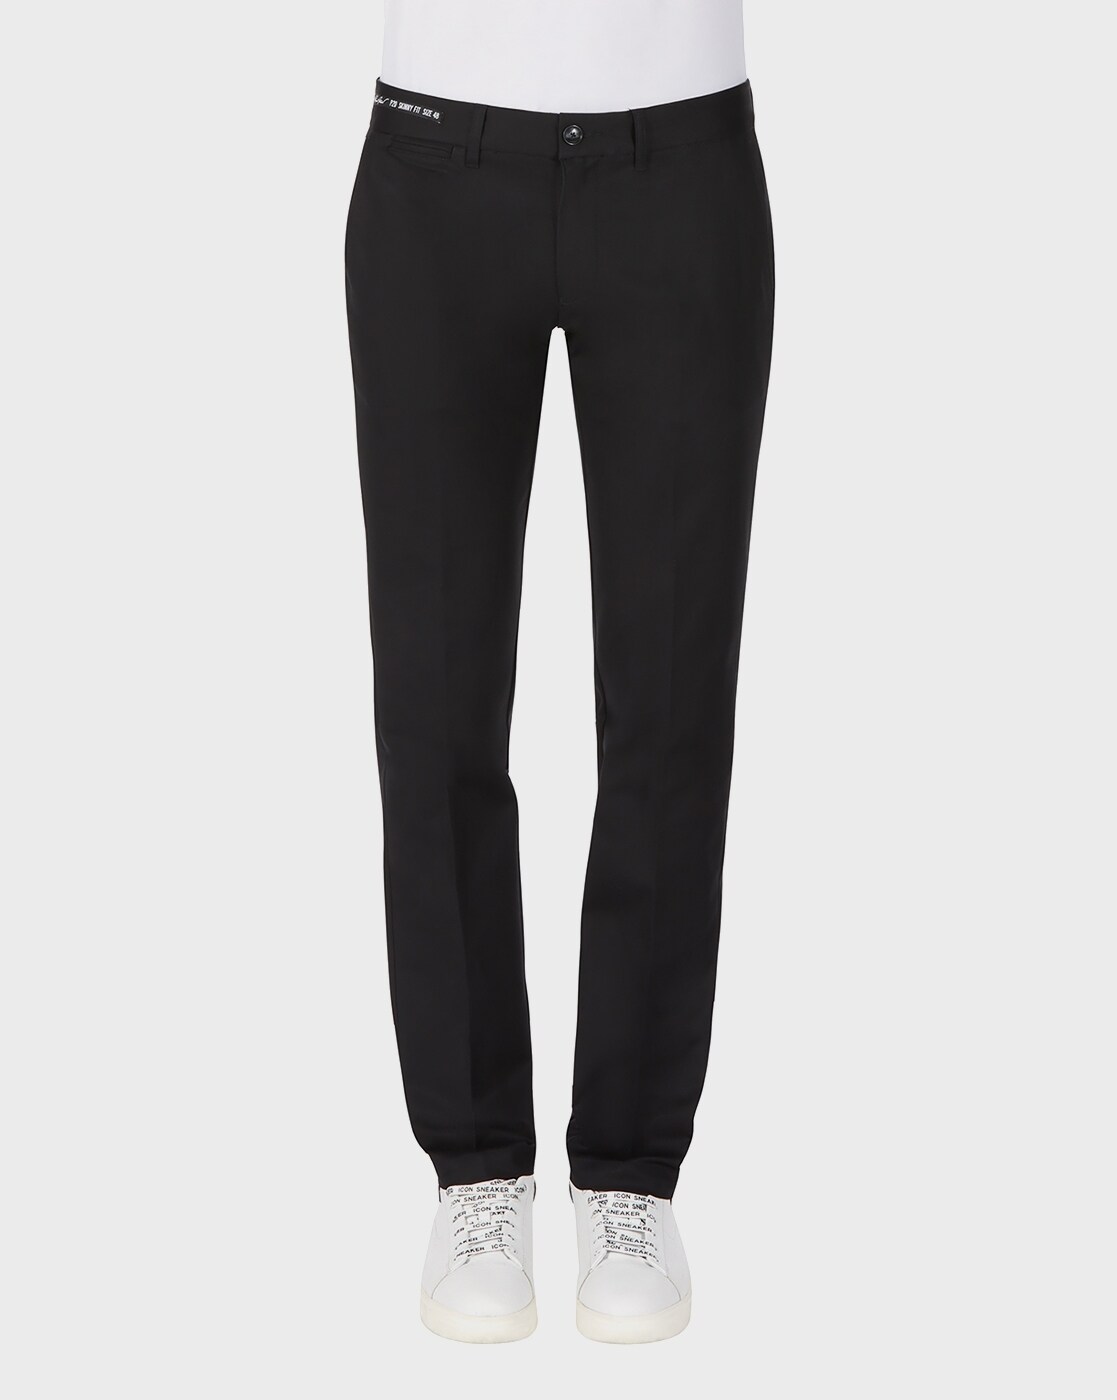 Buy Emporio Armani Men's Stretch Trouser, Blue Navy, 36 at Amazon.in